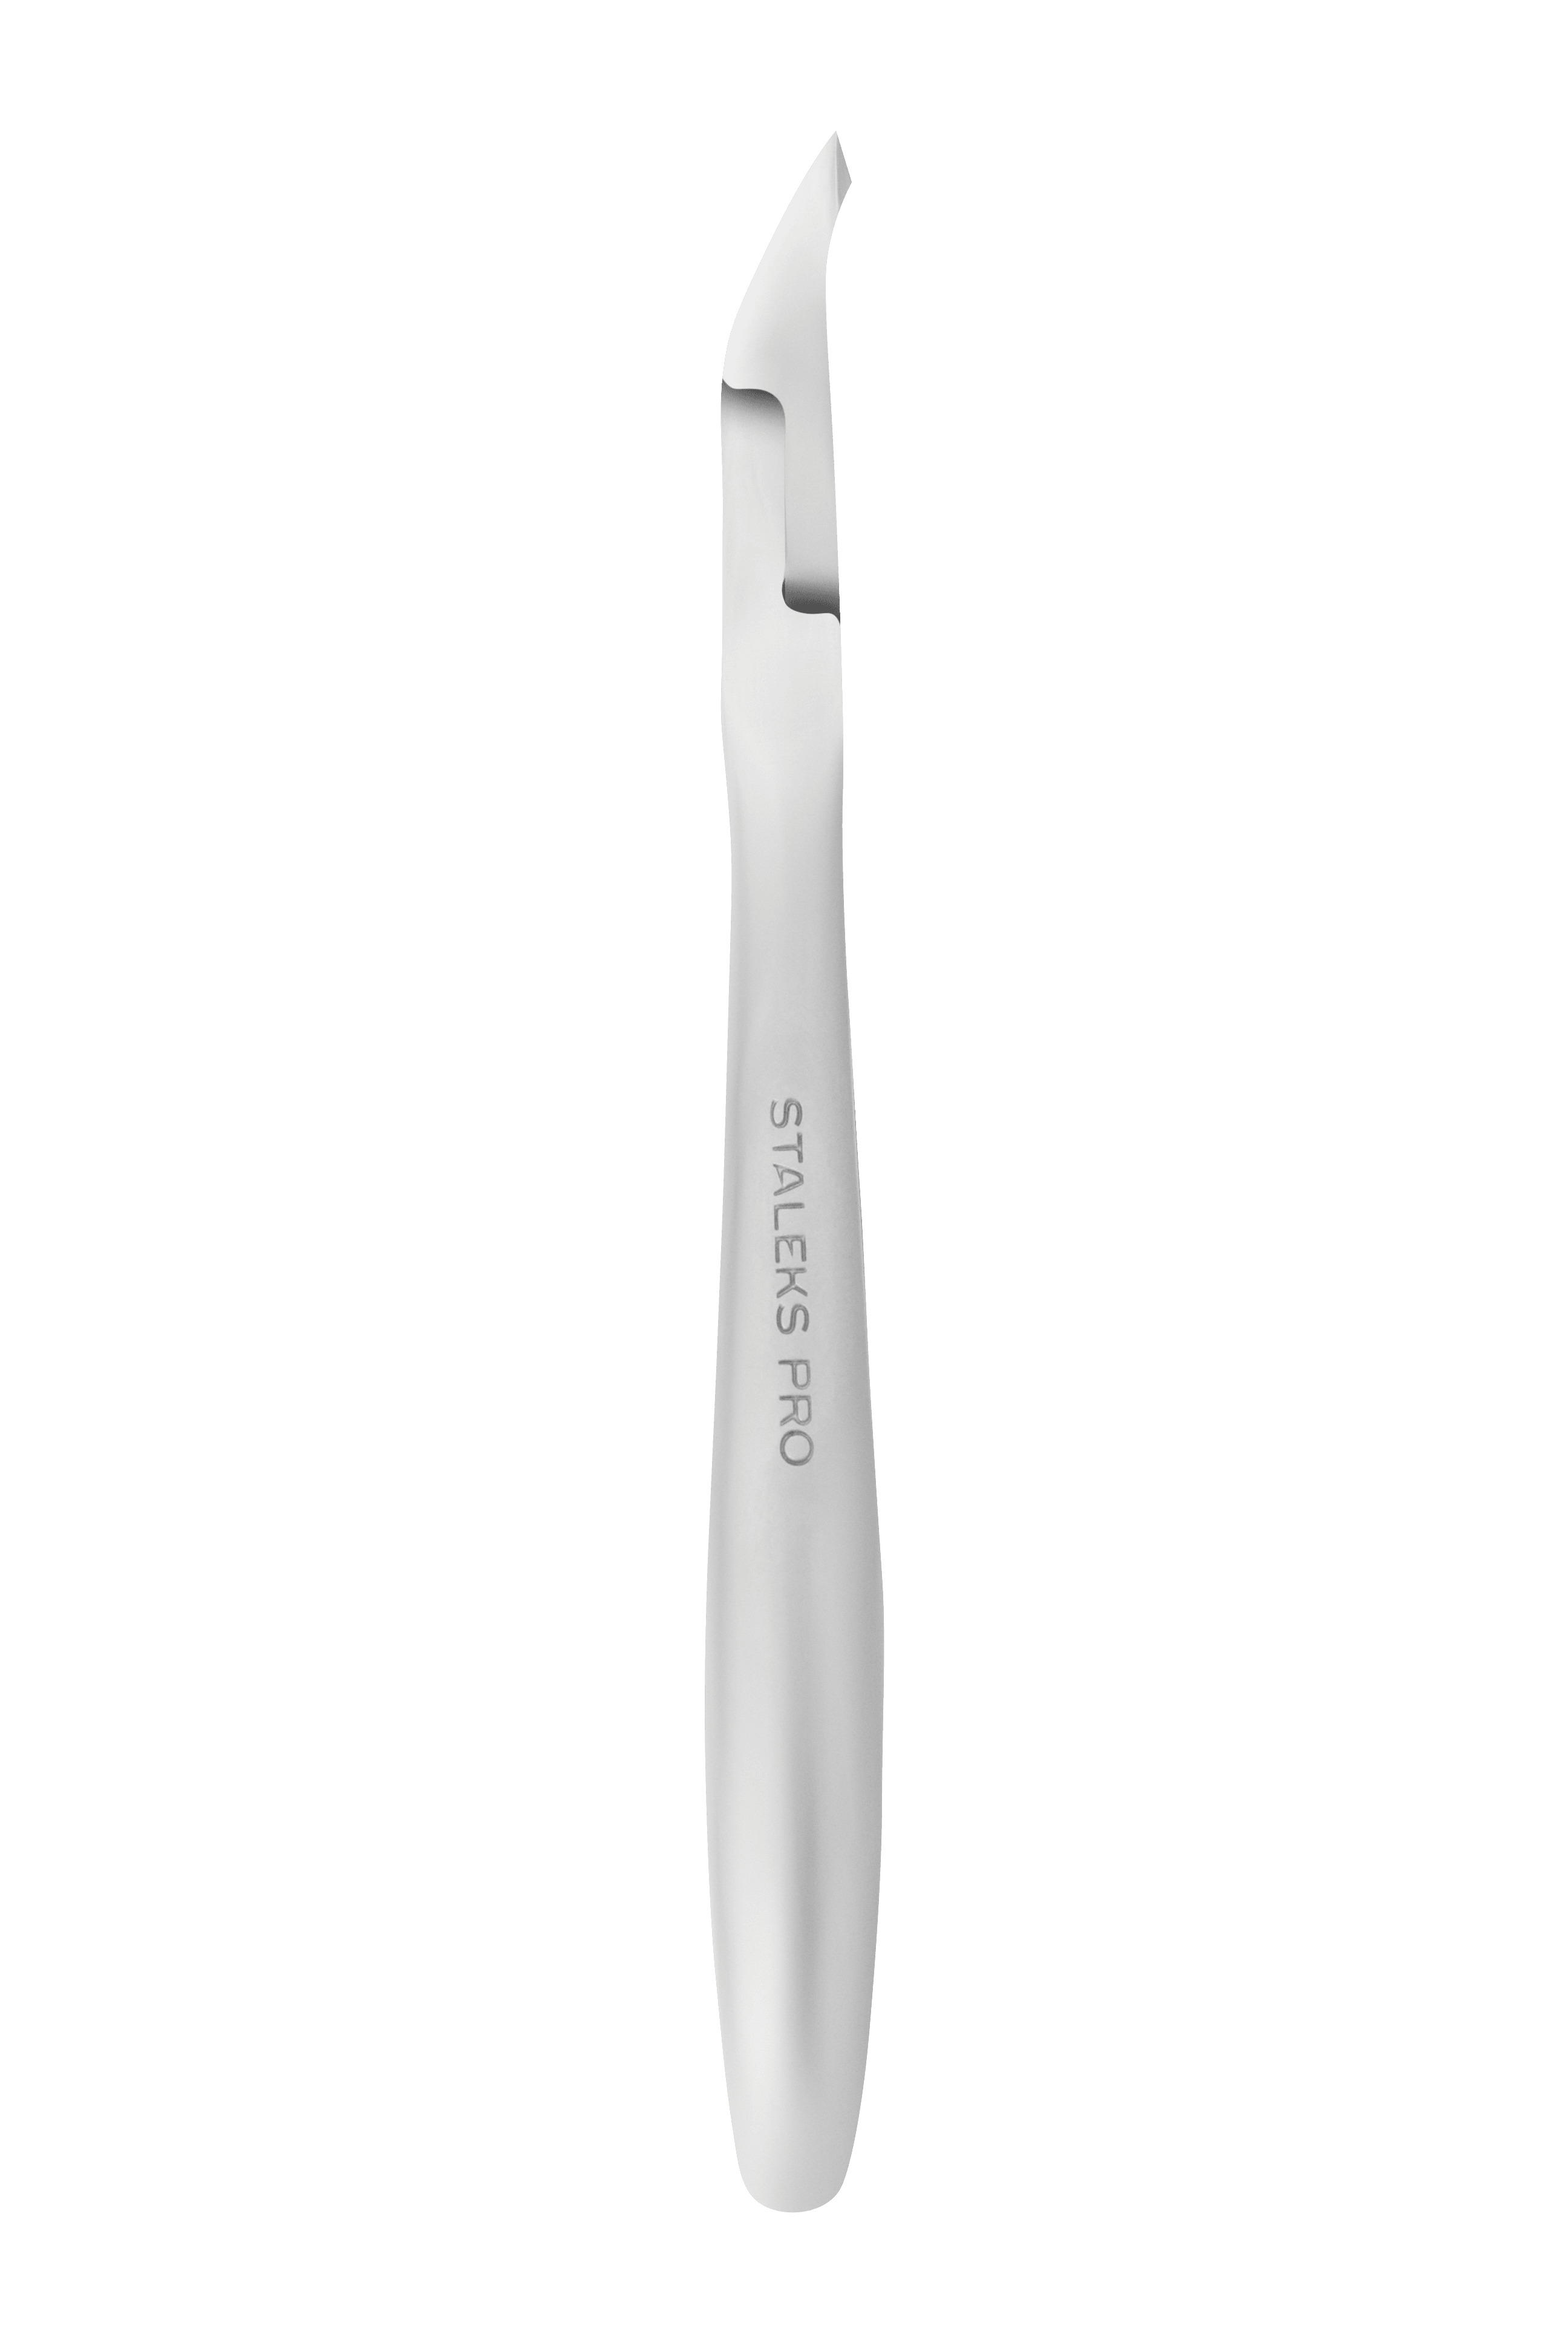 STALEKS SMART NS 10/3 - Tronchesina professionale per cuticole unghie 3mm - Divina Nails